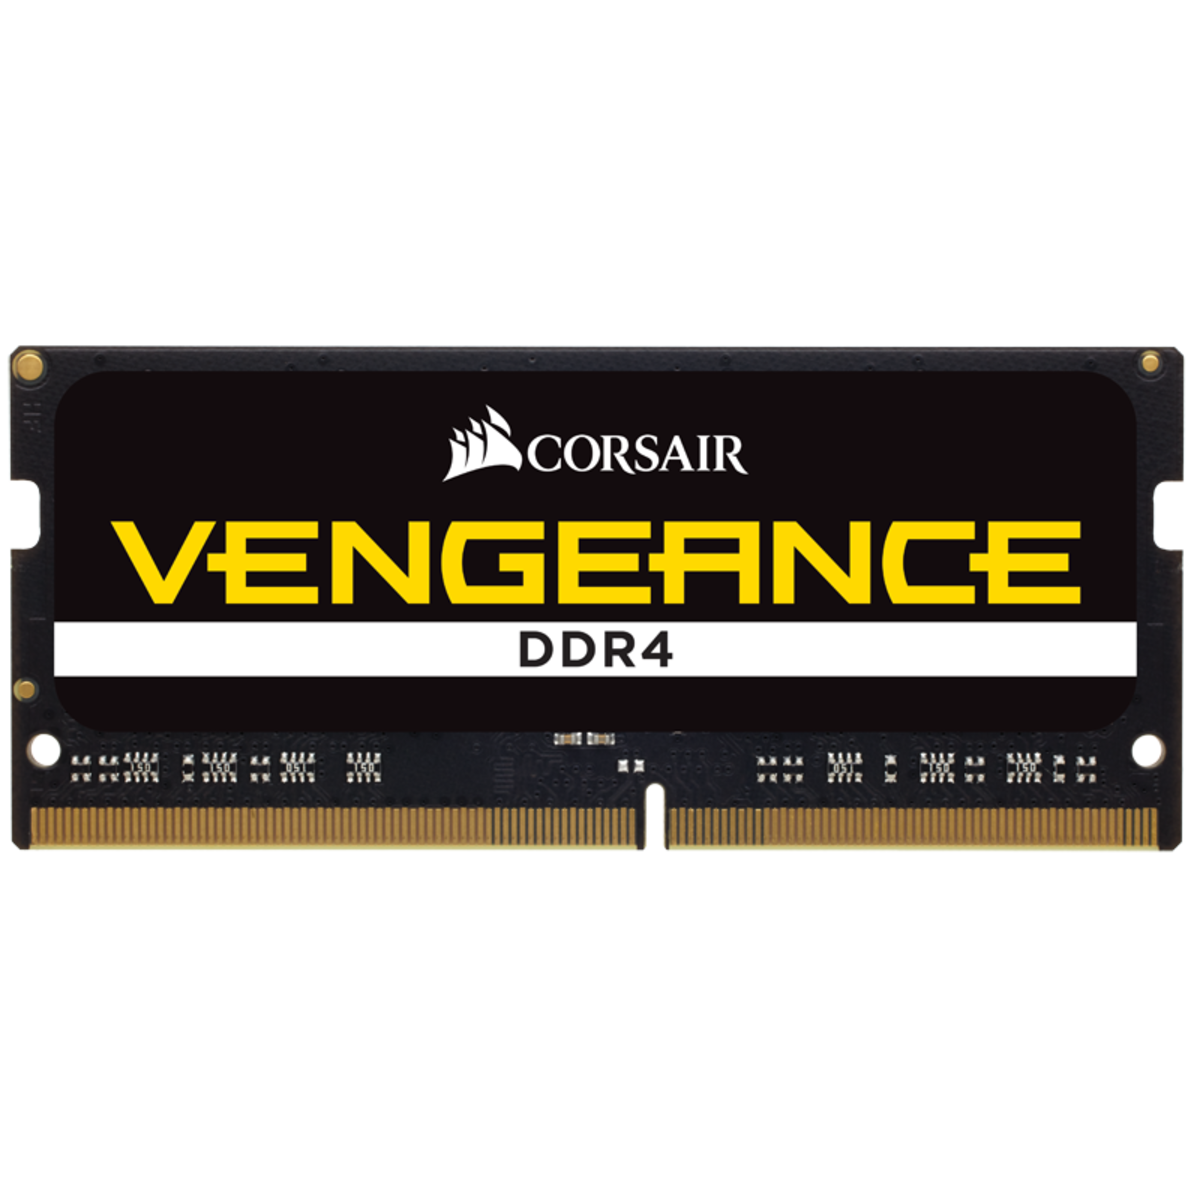 MEMORIA SODIMM DDR4 CORSAIR 4GB 2133Mhz 1x4 CMSO4GX4M1A2133C15